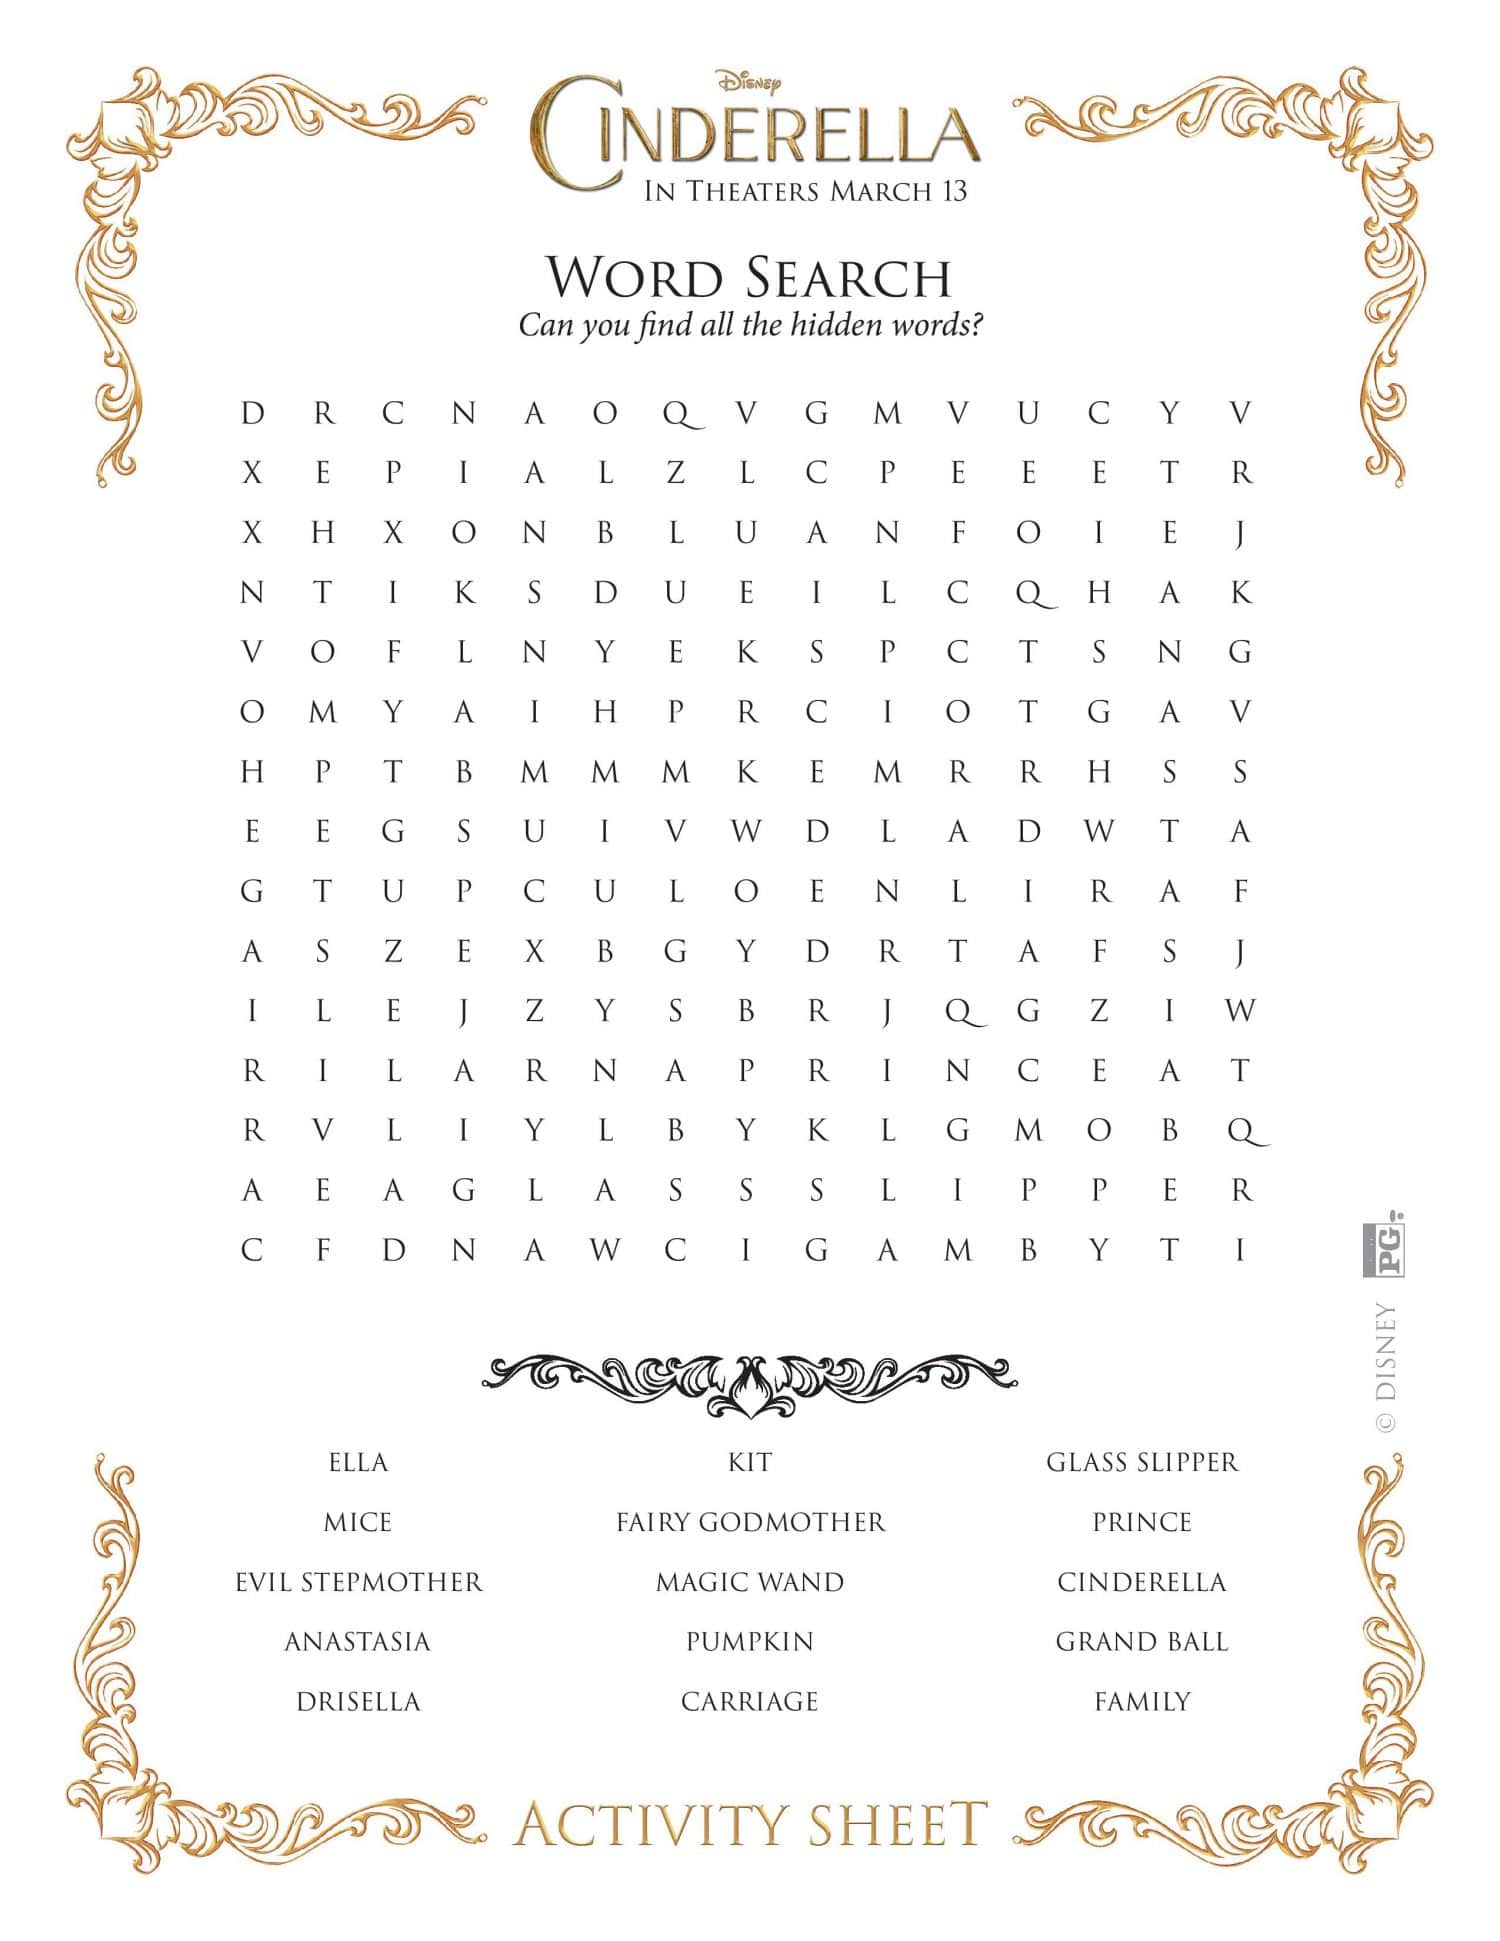 Cinderella word search